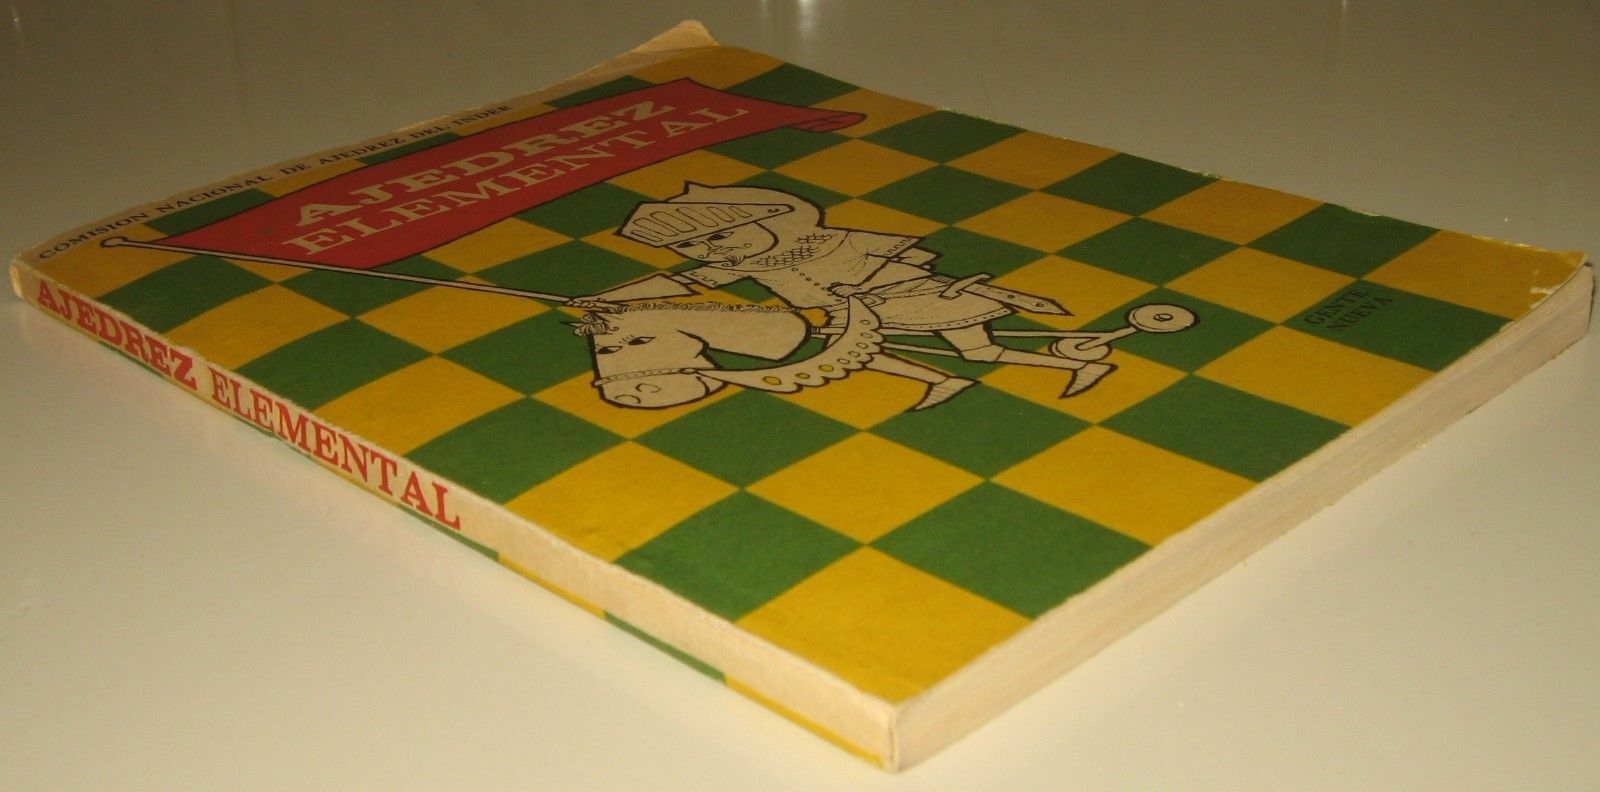 11879.Spanish Chess Book: Ajedrez elemental. Habana, 1968